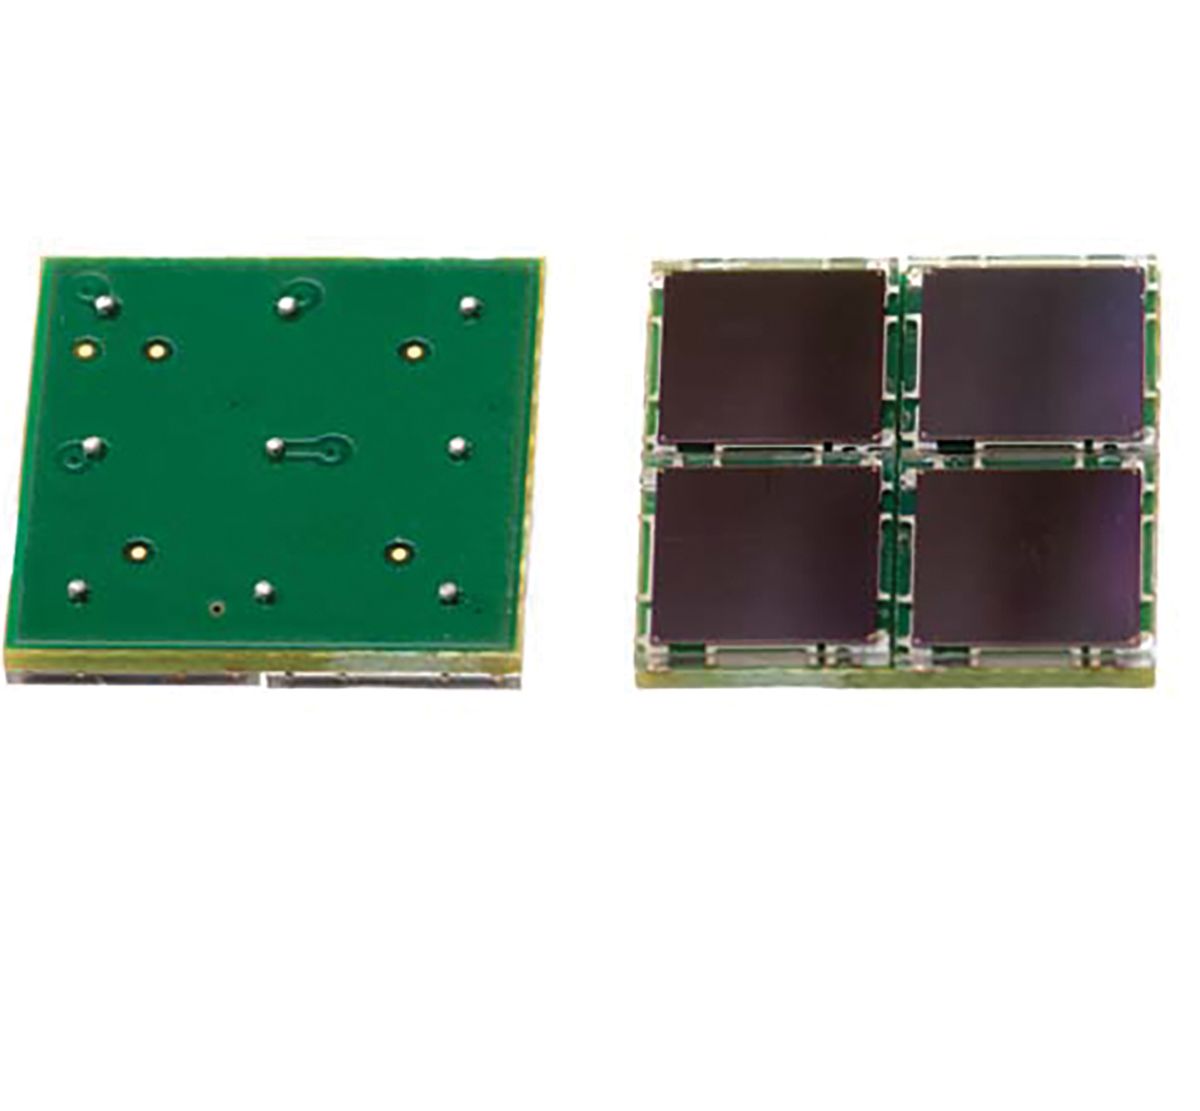 onsemi, ArrayC-60035-4P-BGA 1-Element Photomultiplier, Through Hole BGA package